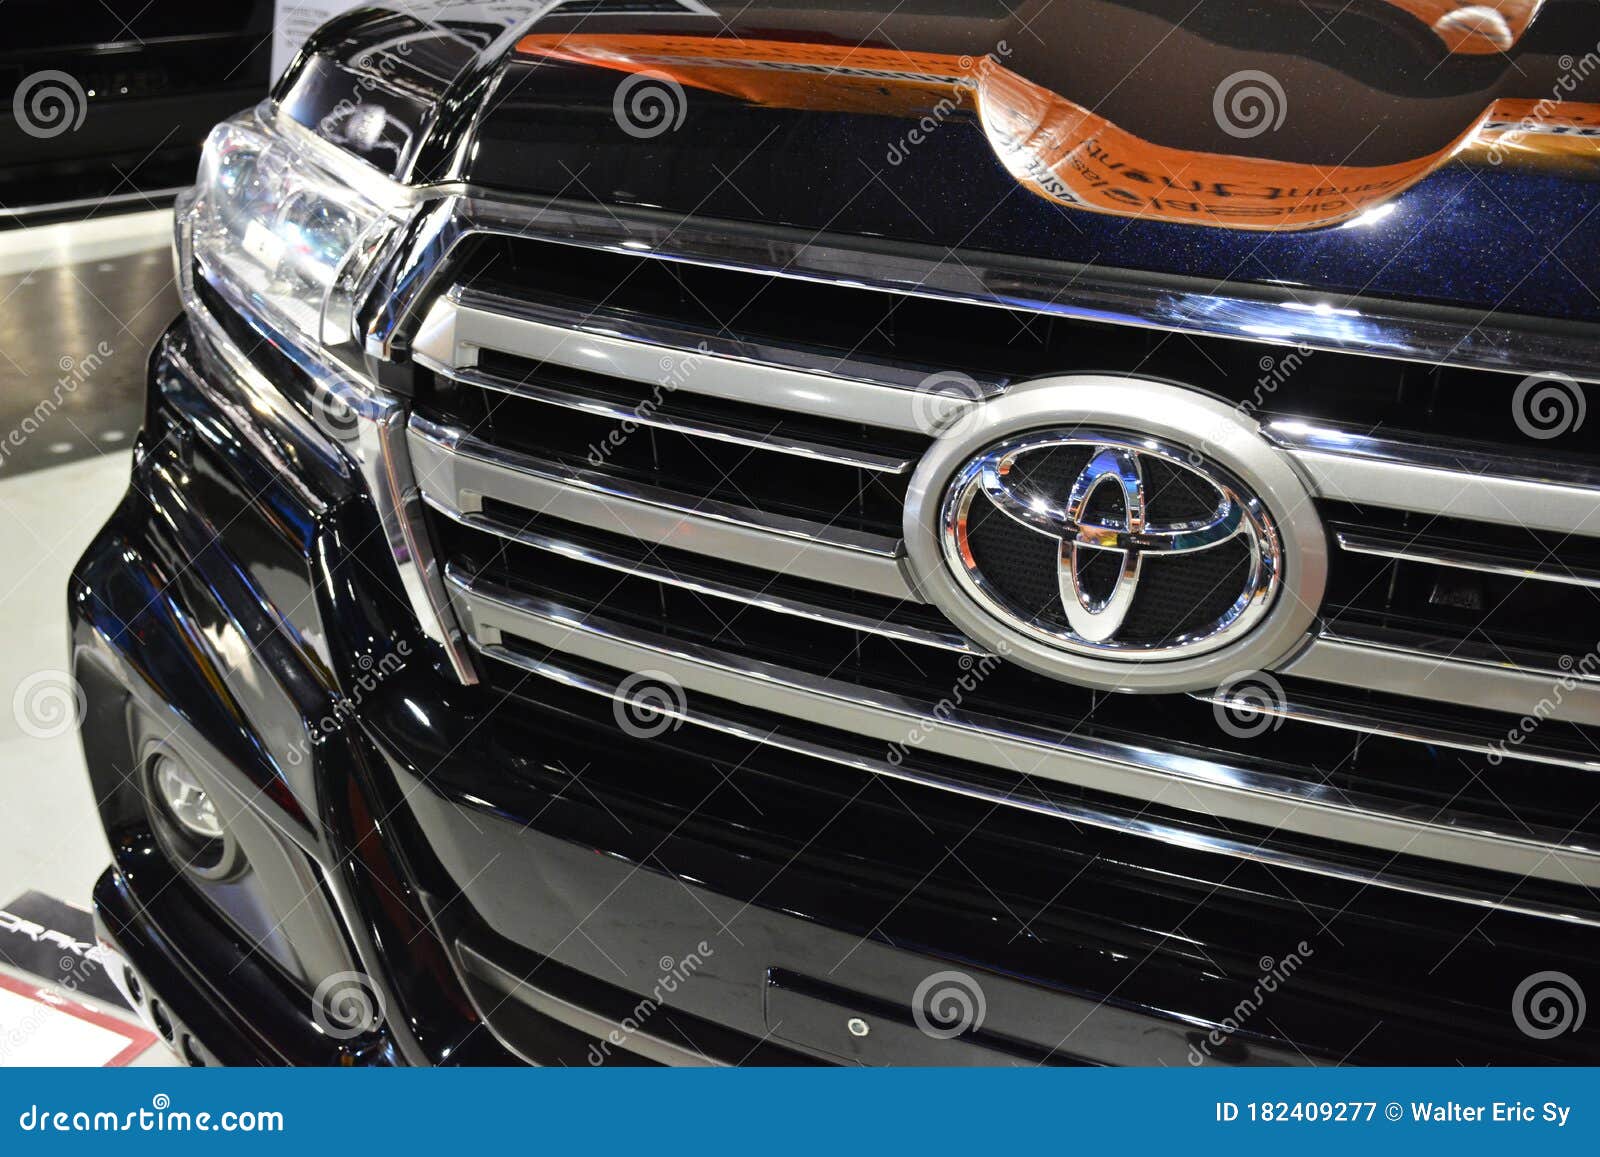 Toyota Land Cruiser Emblem At Manila Auto Salon Car Show